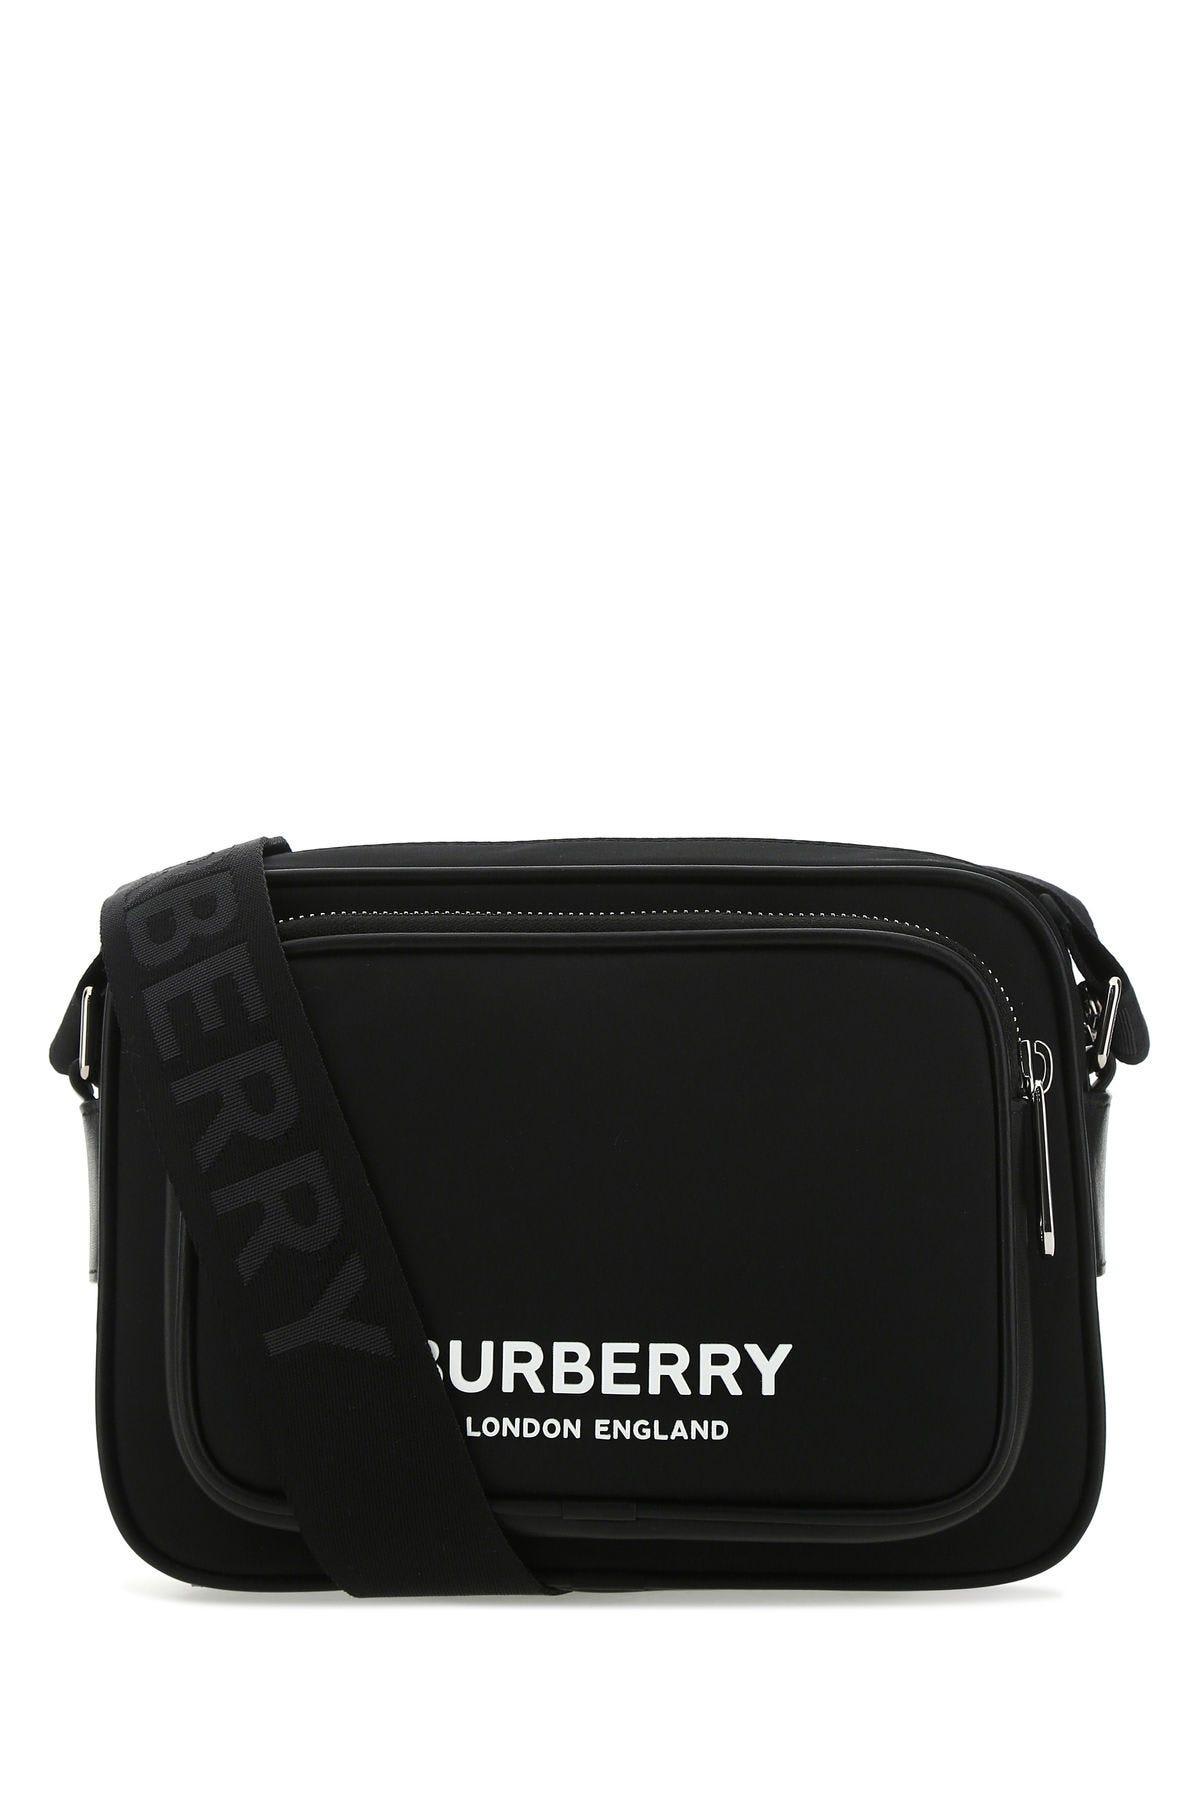 Burberry Black Econyl Crossbody Bag | italist